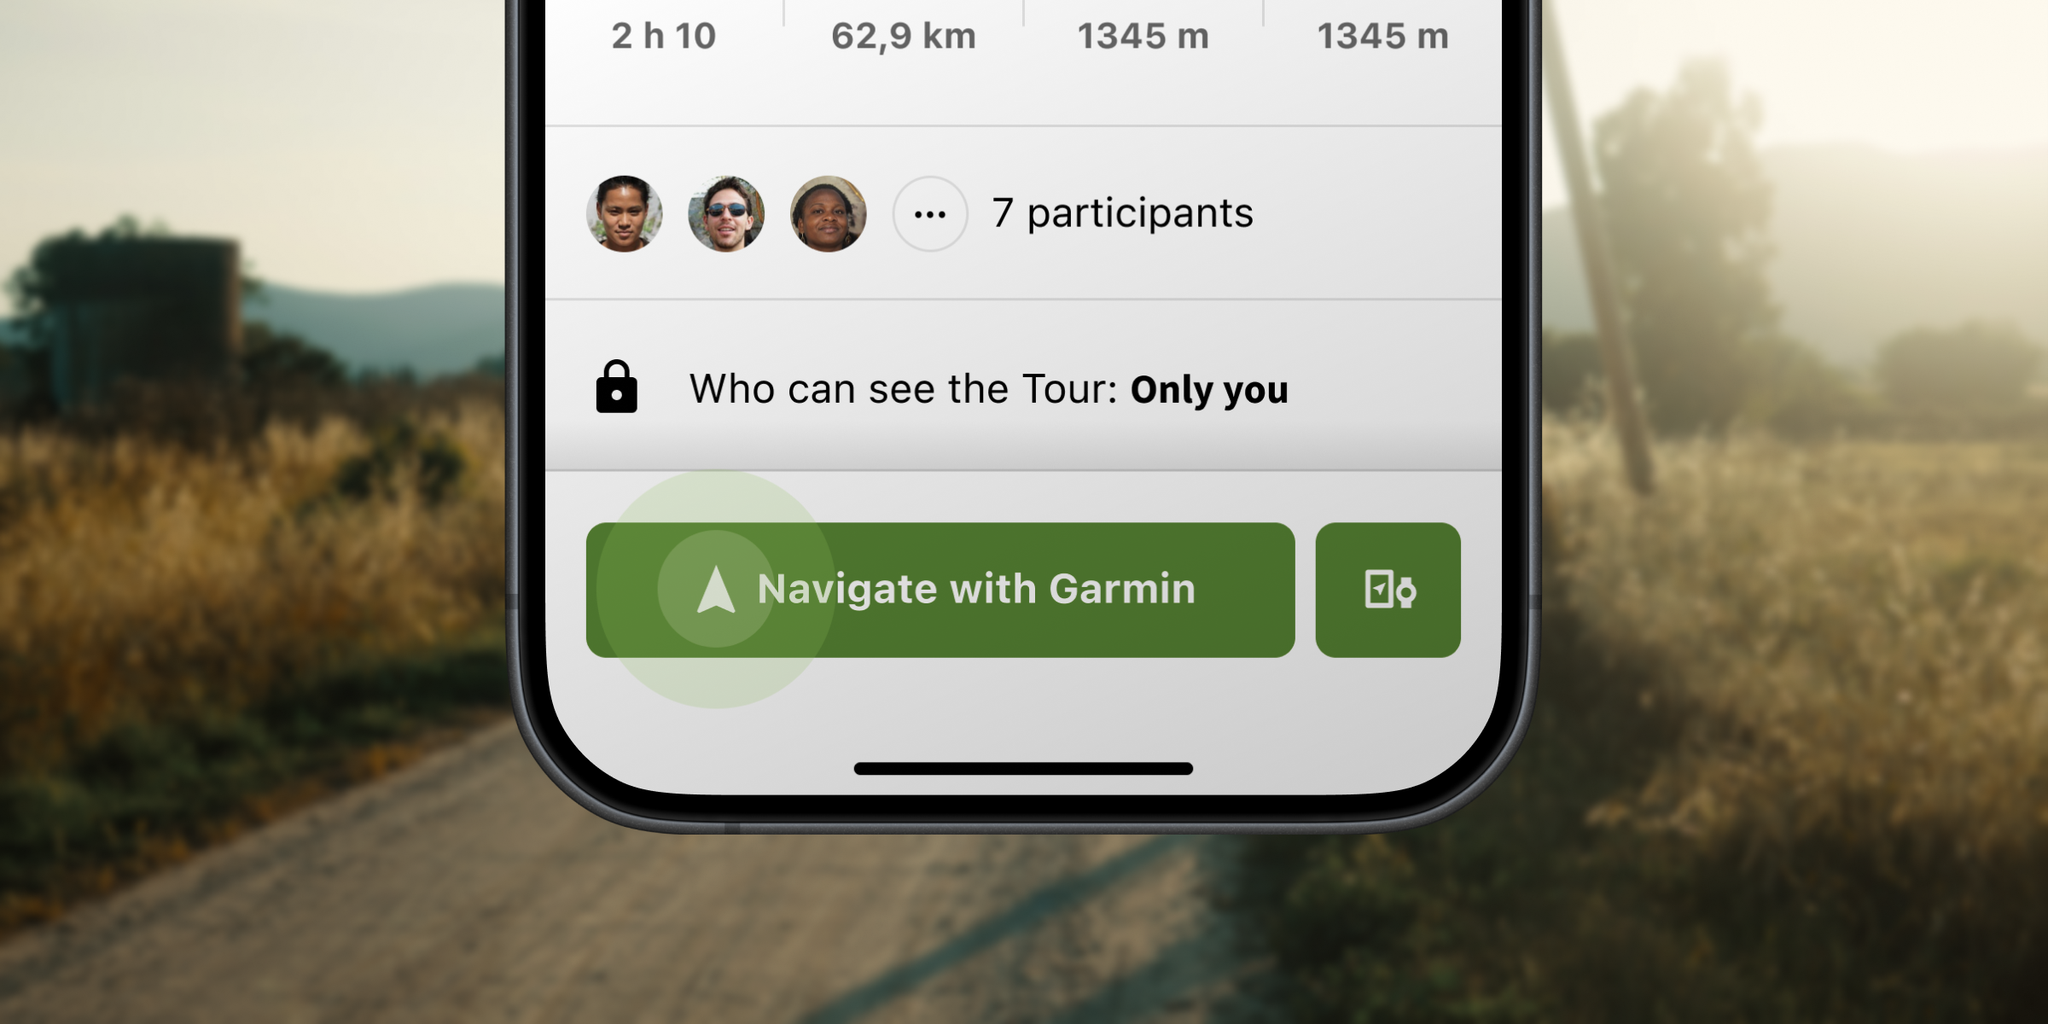 update komoot route on Garmin gps bike computer